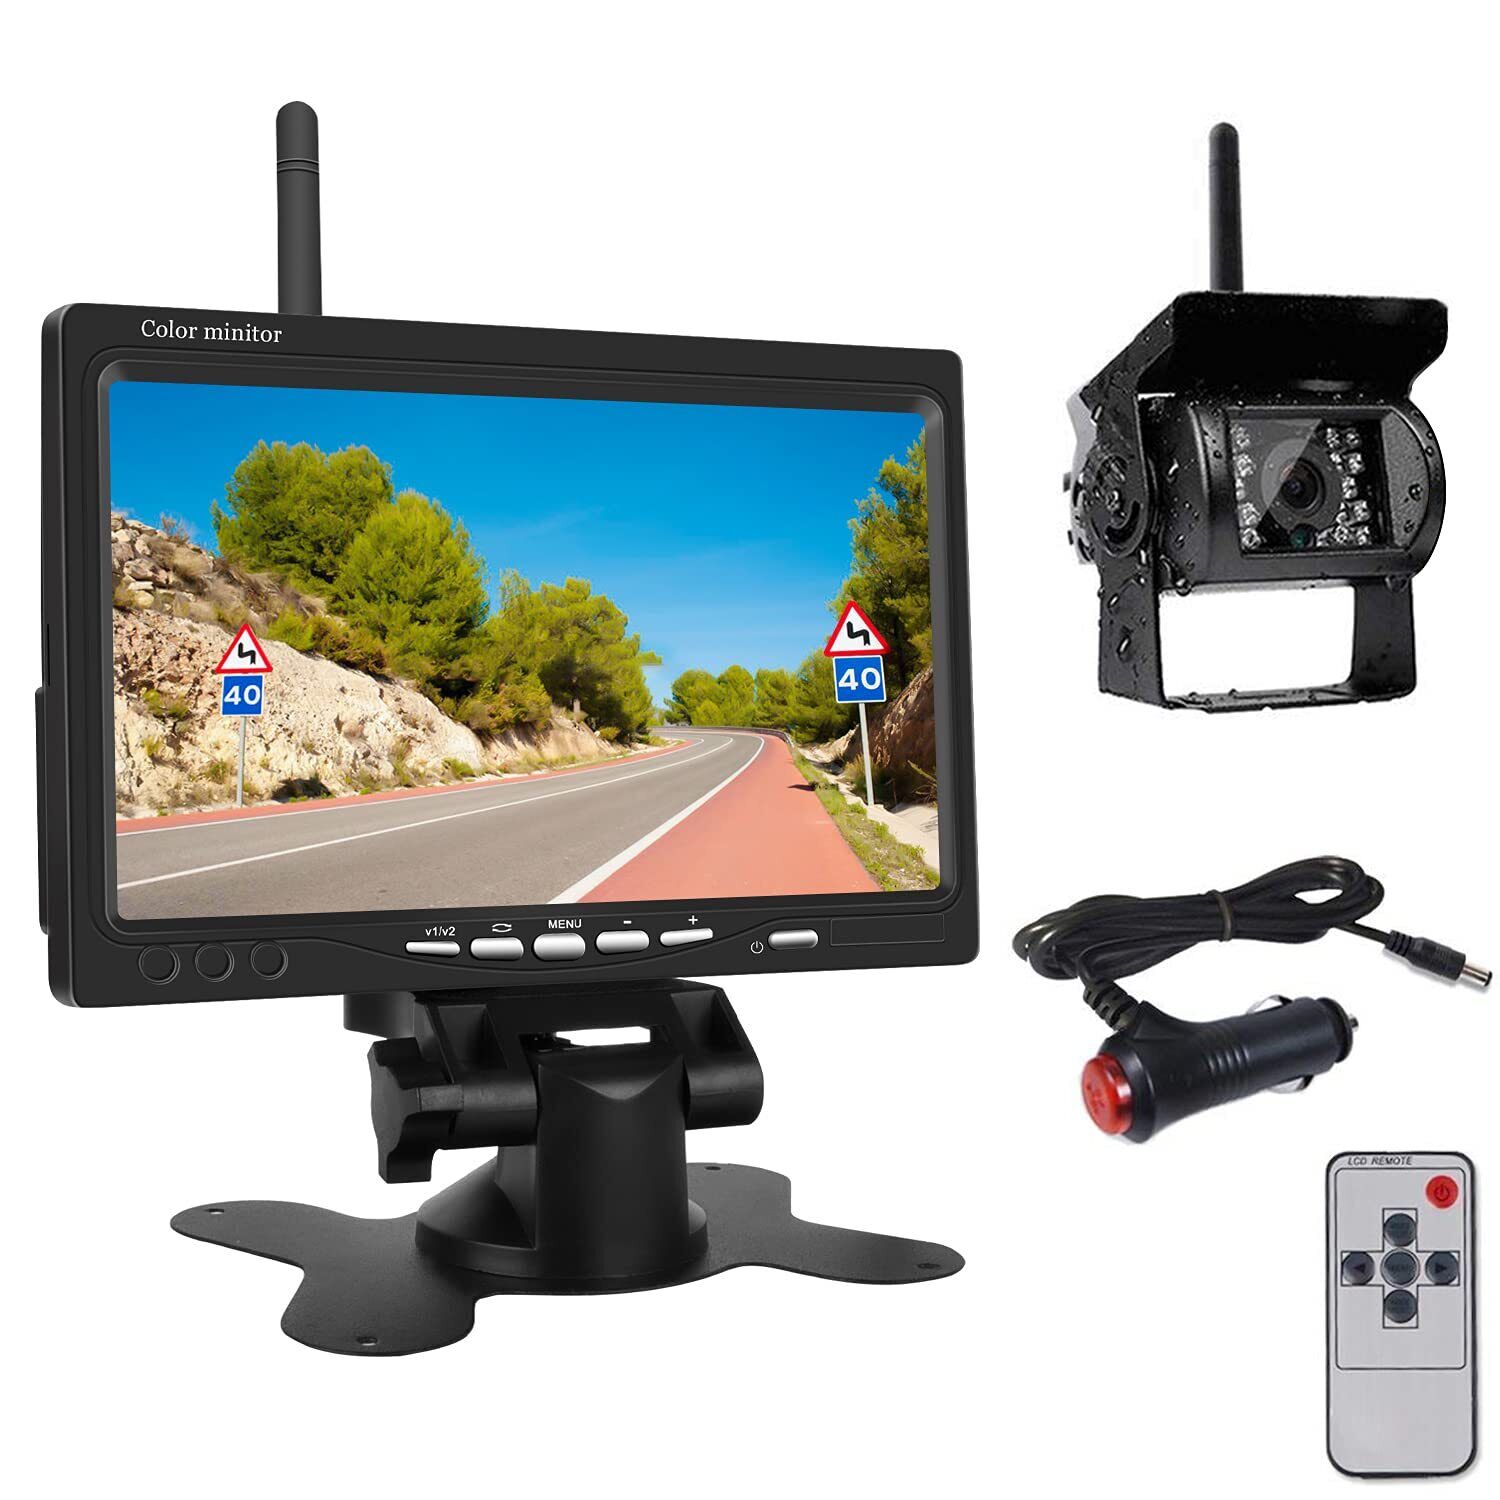 Wireless Car Backup Camera and Monitor Kit, Waterproof Night Vision Wireless ...